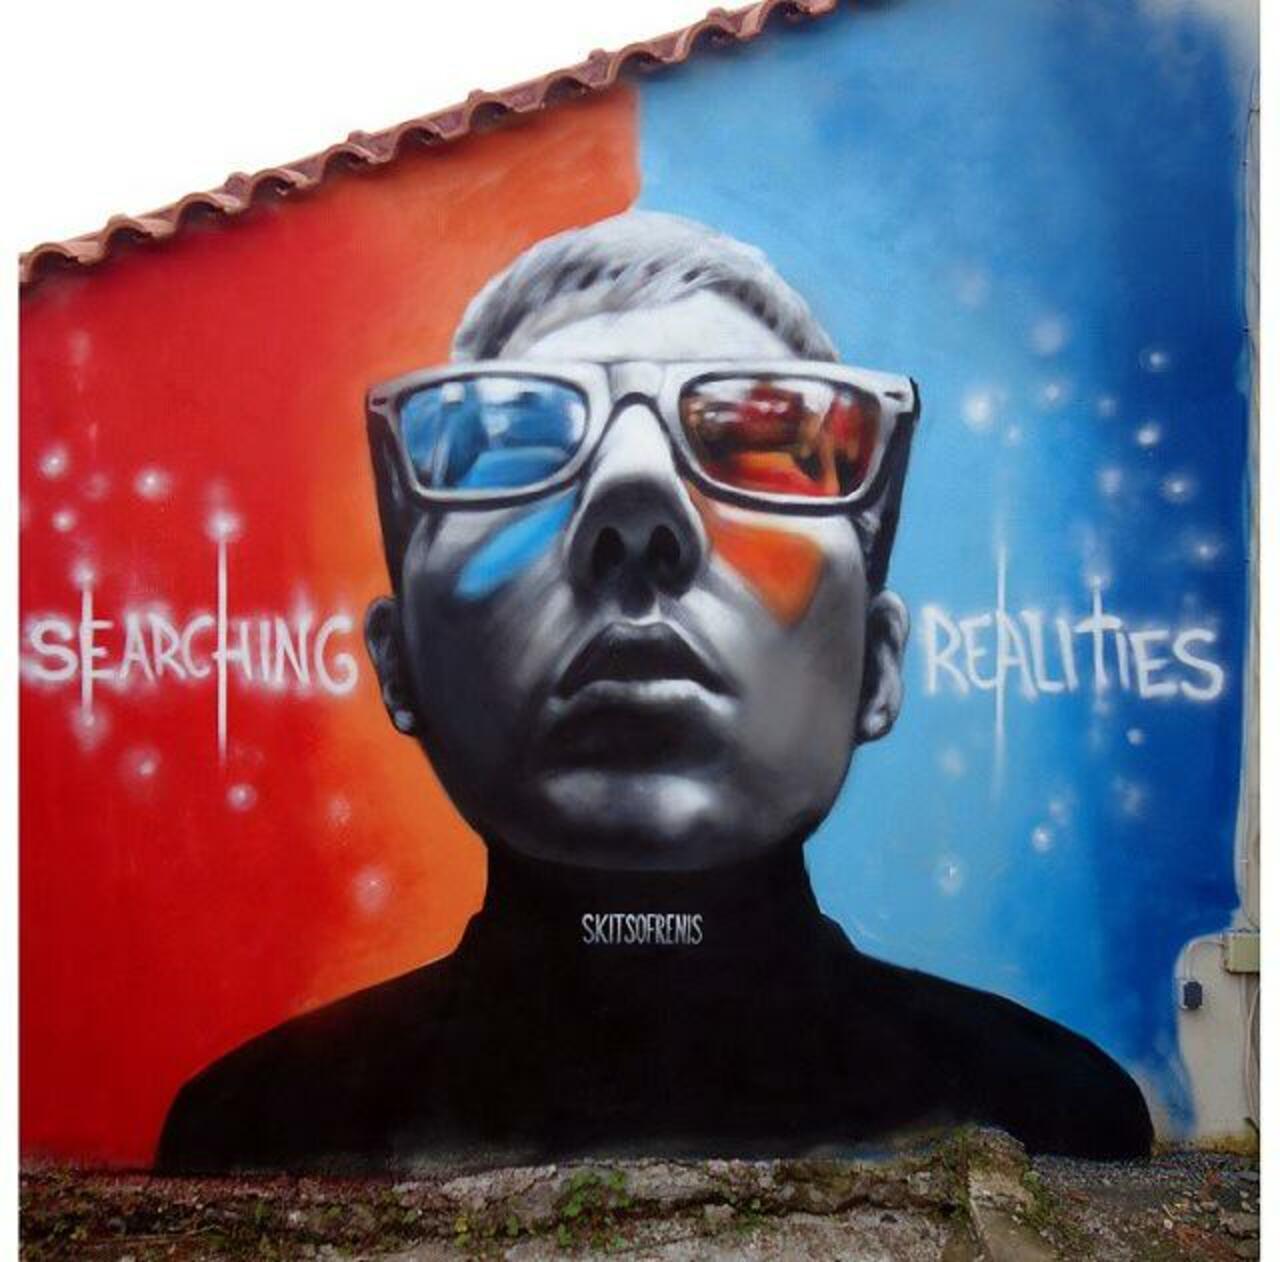 New Street Art titled 'Searching Realties' by skitsofrenis

#art #arte #graffiti #streetart http://t.co/5FTOm8wUCm